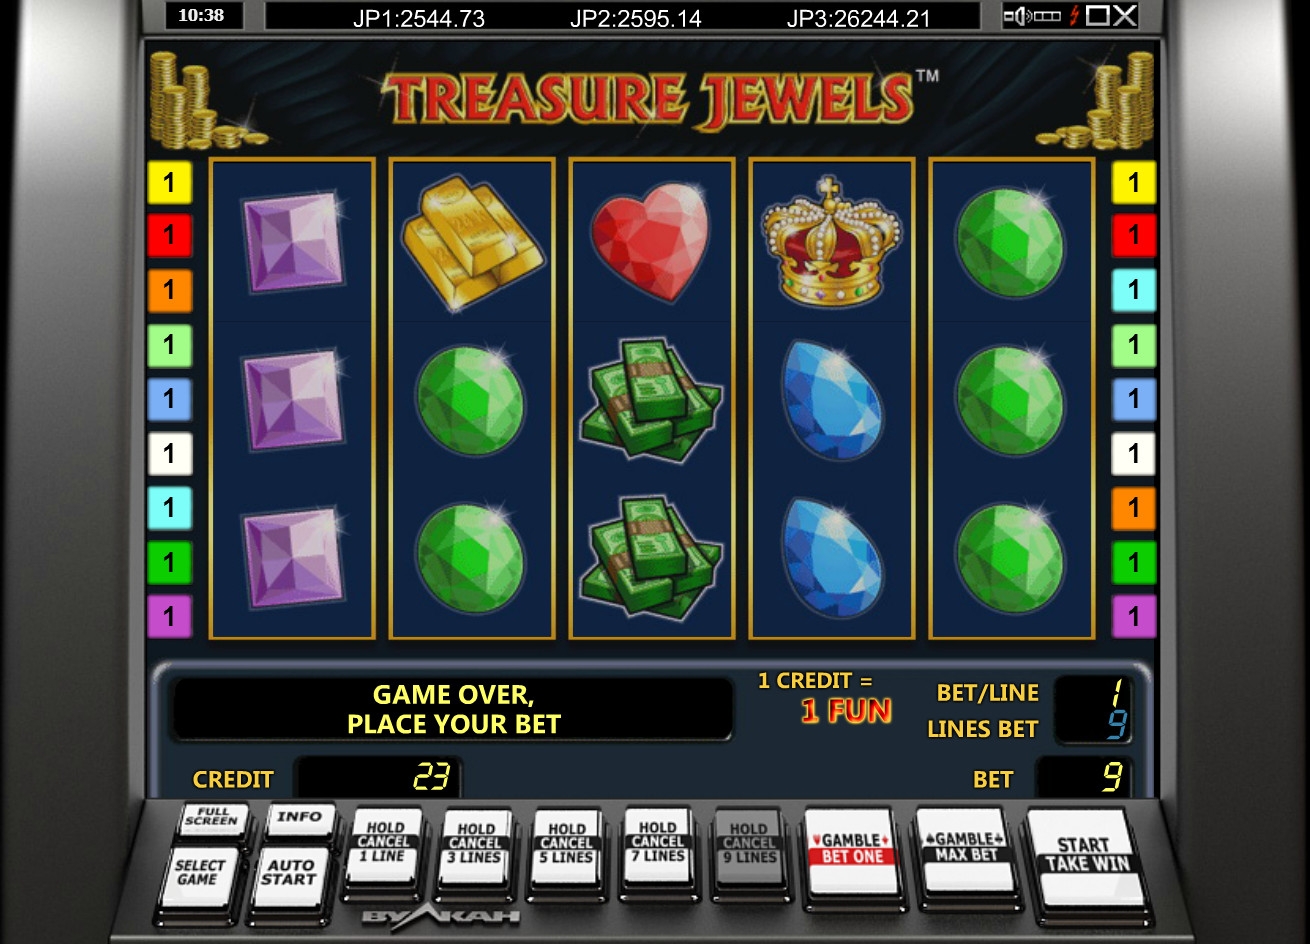 Treasure Jewels (Treasure Jewels) from category Slots